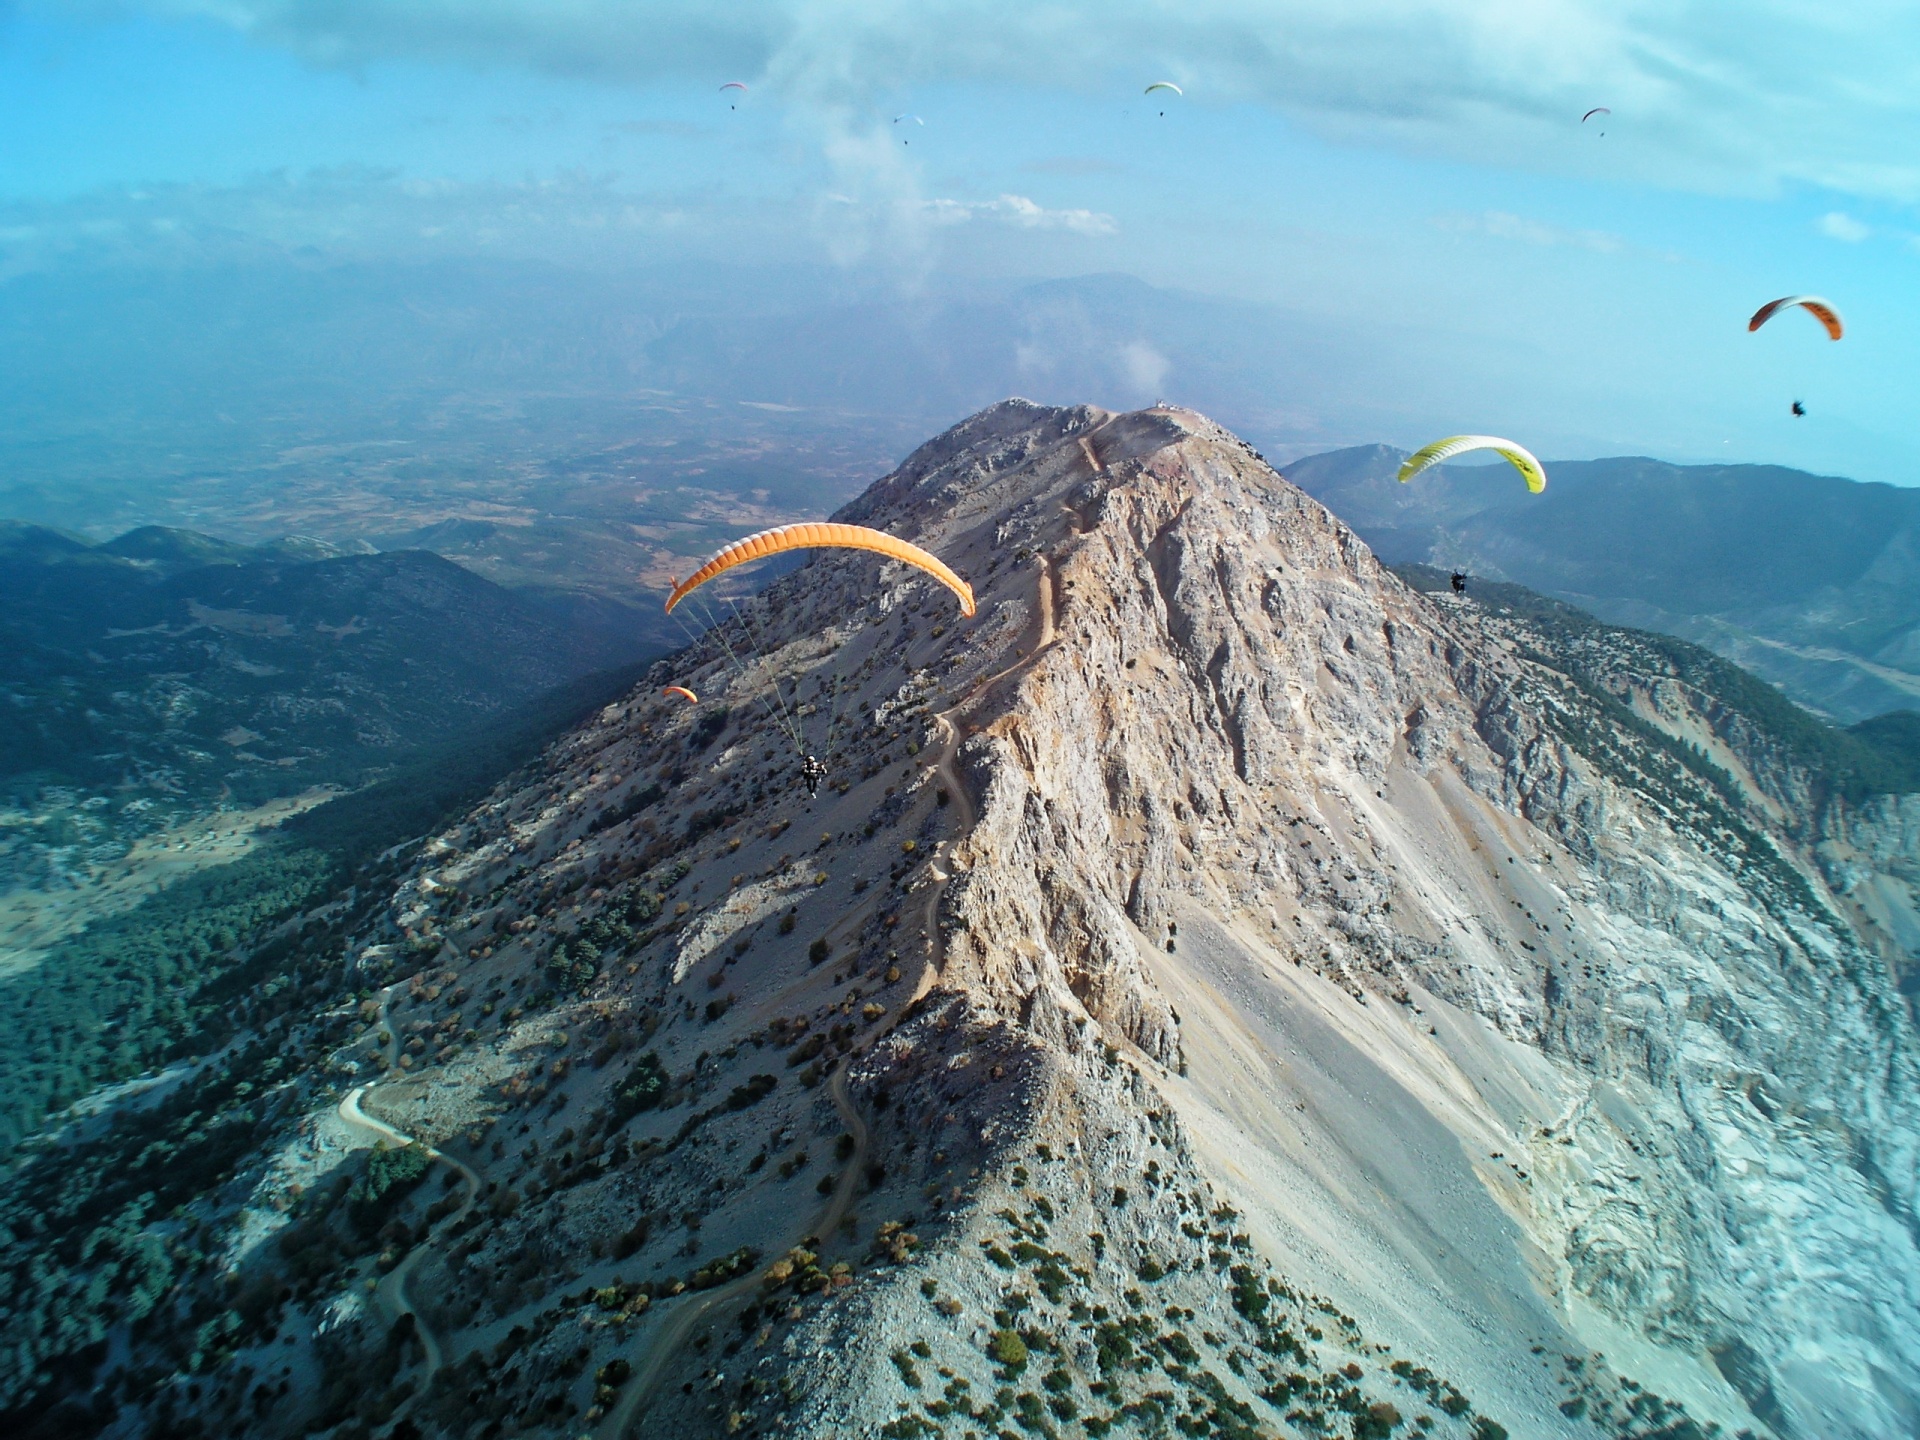 Paragliding 4